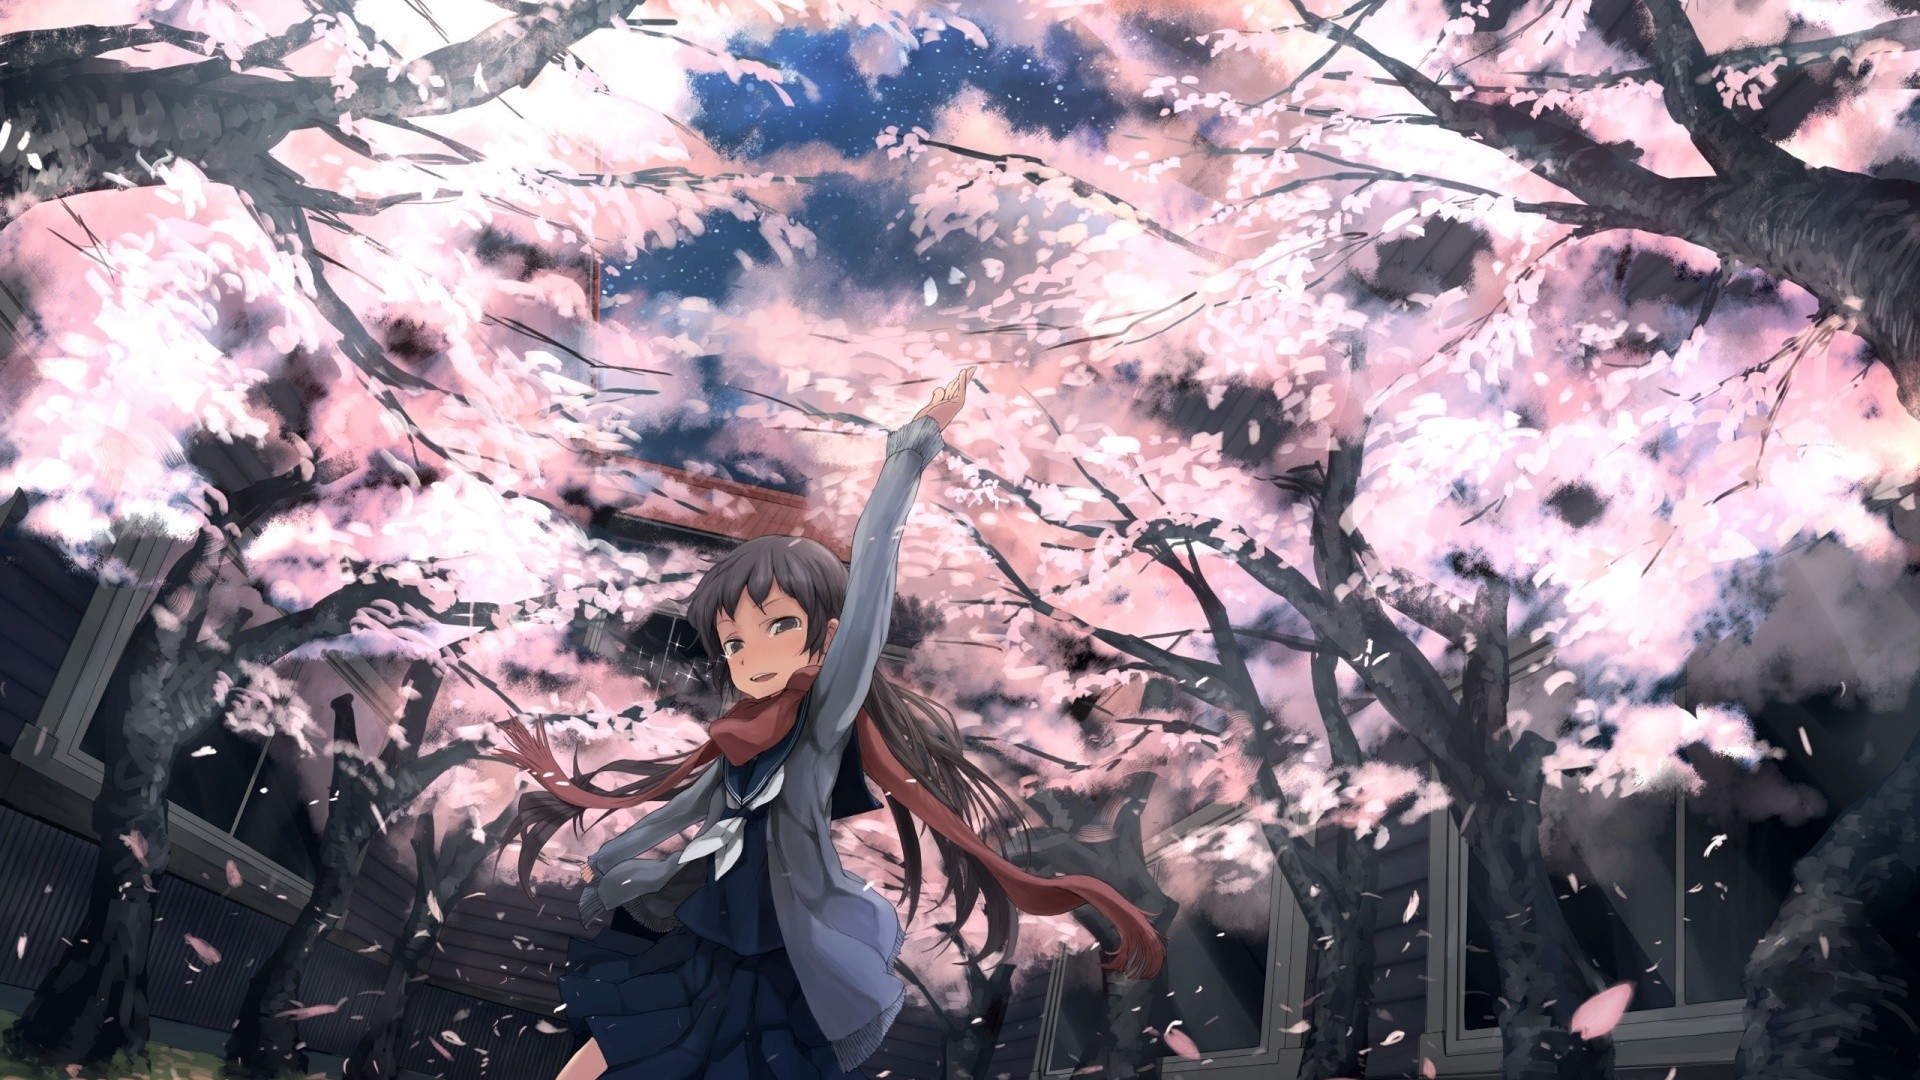 Anime 1920x1080 anime girls anime trees arms up dark hair long hair cherry blossom women outdoors scarf